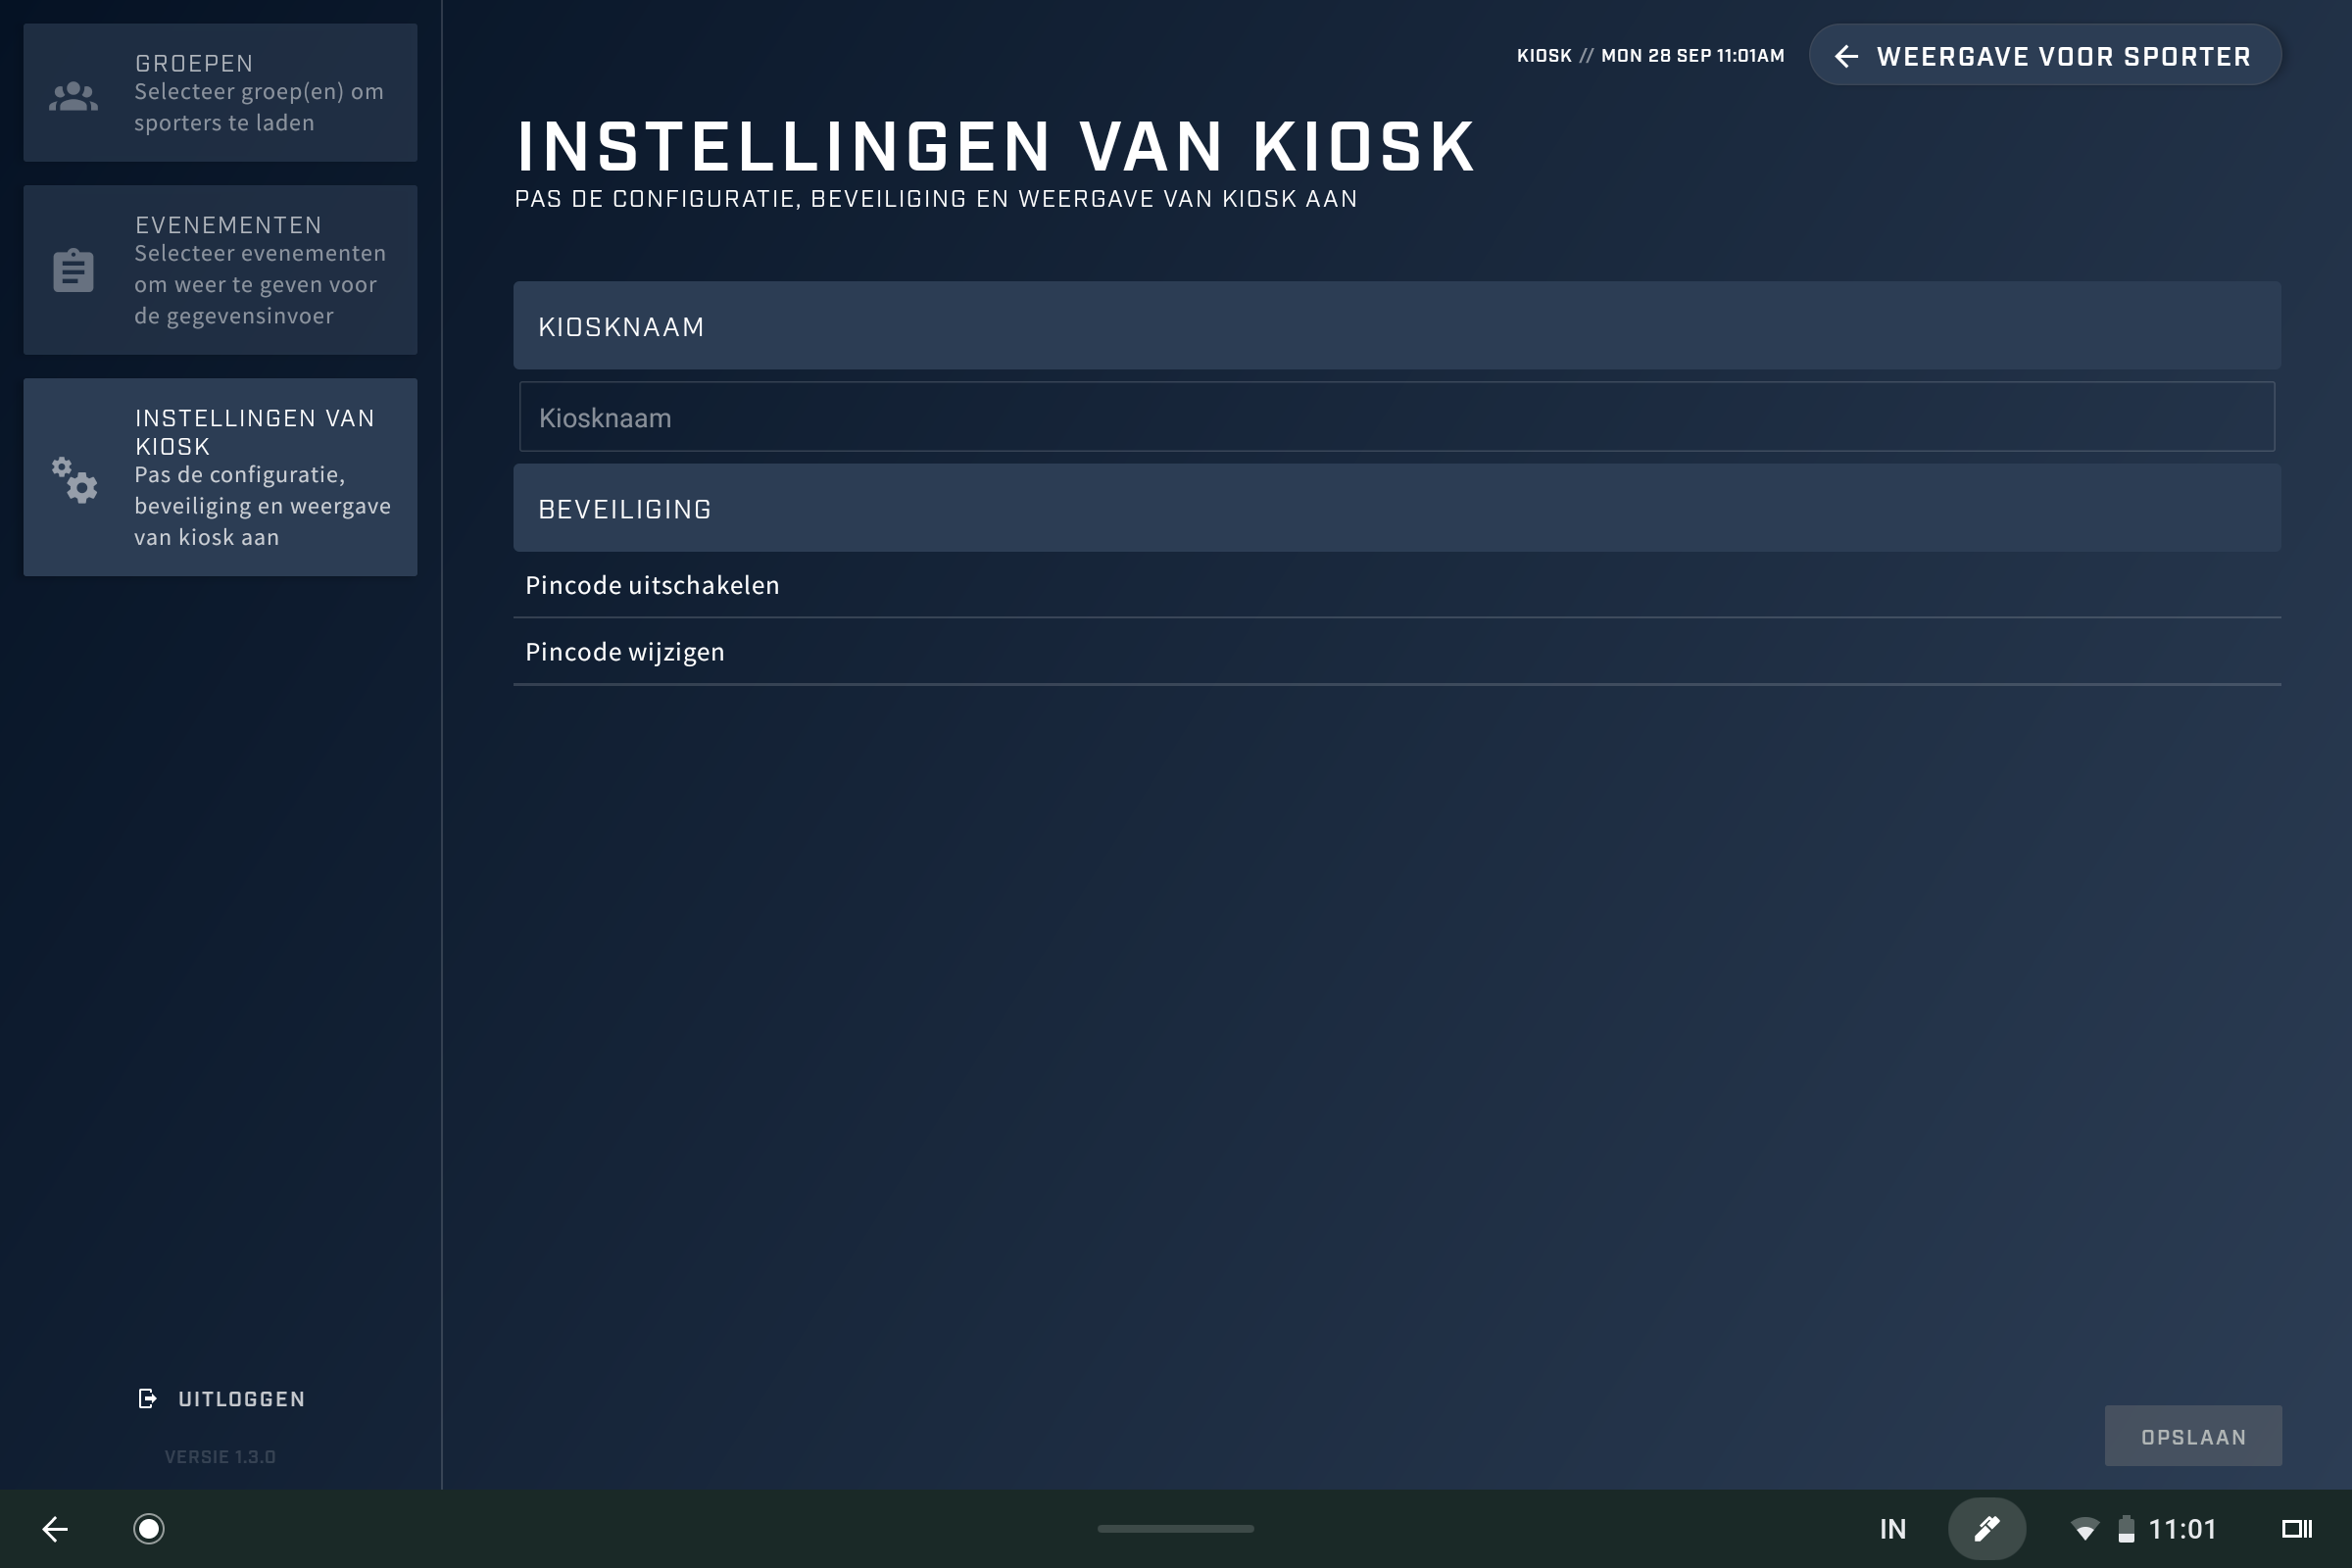 A screenshot from the Kiosk app using Dutch language translation